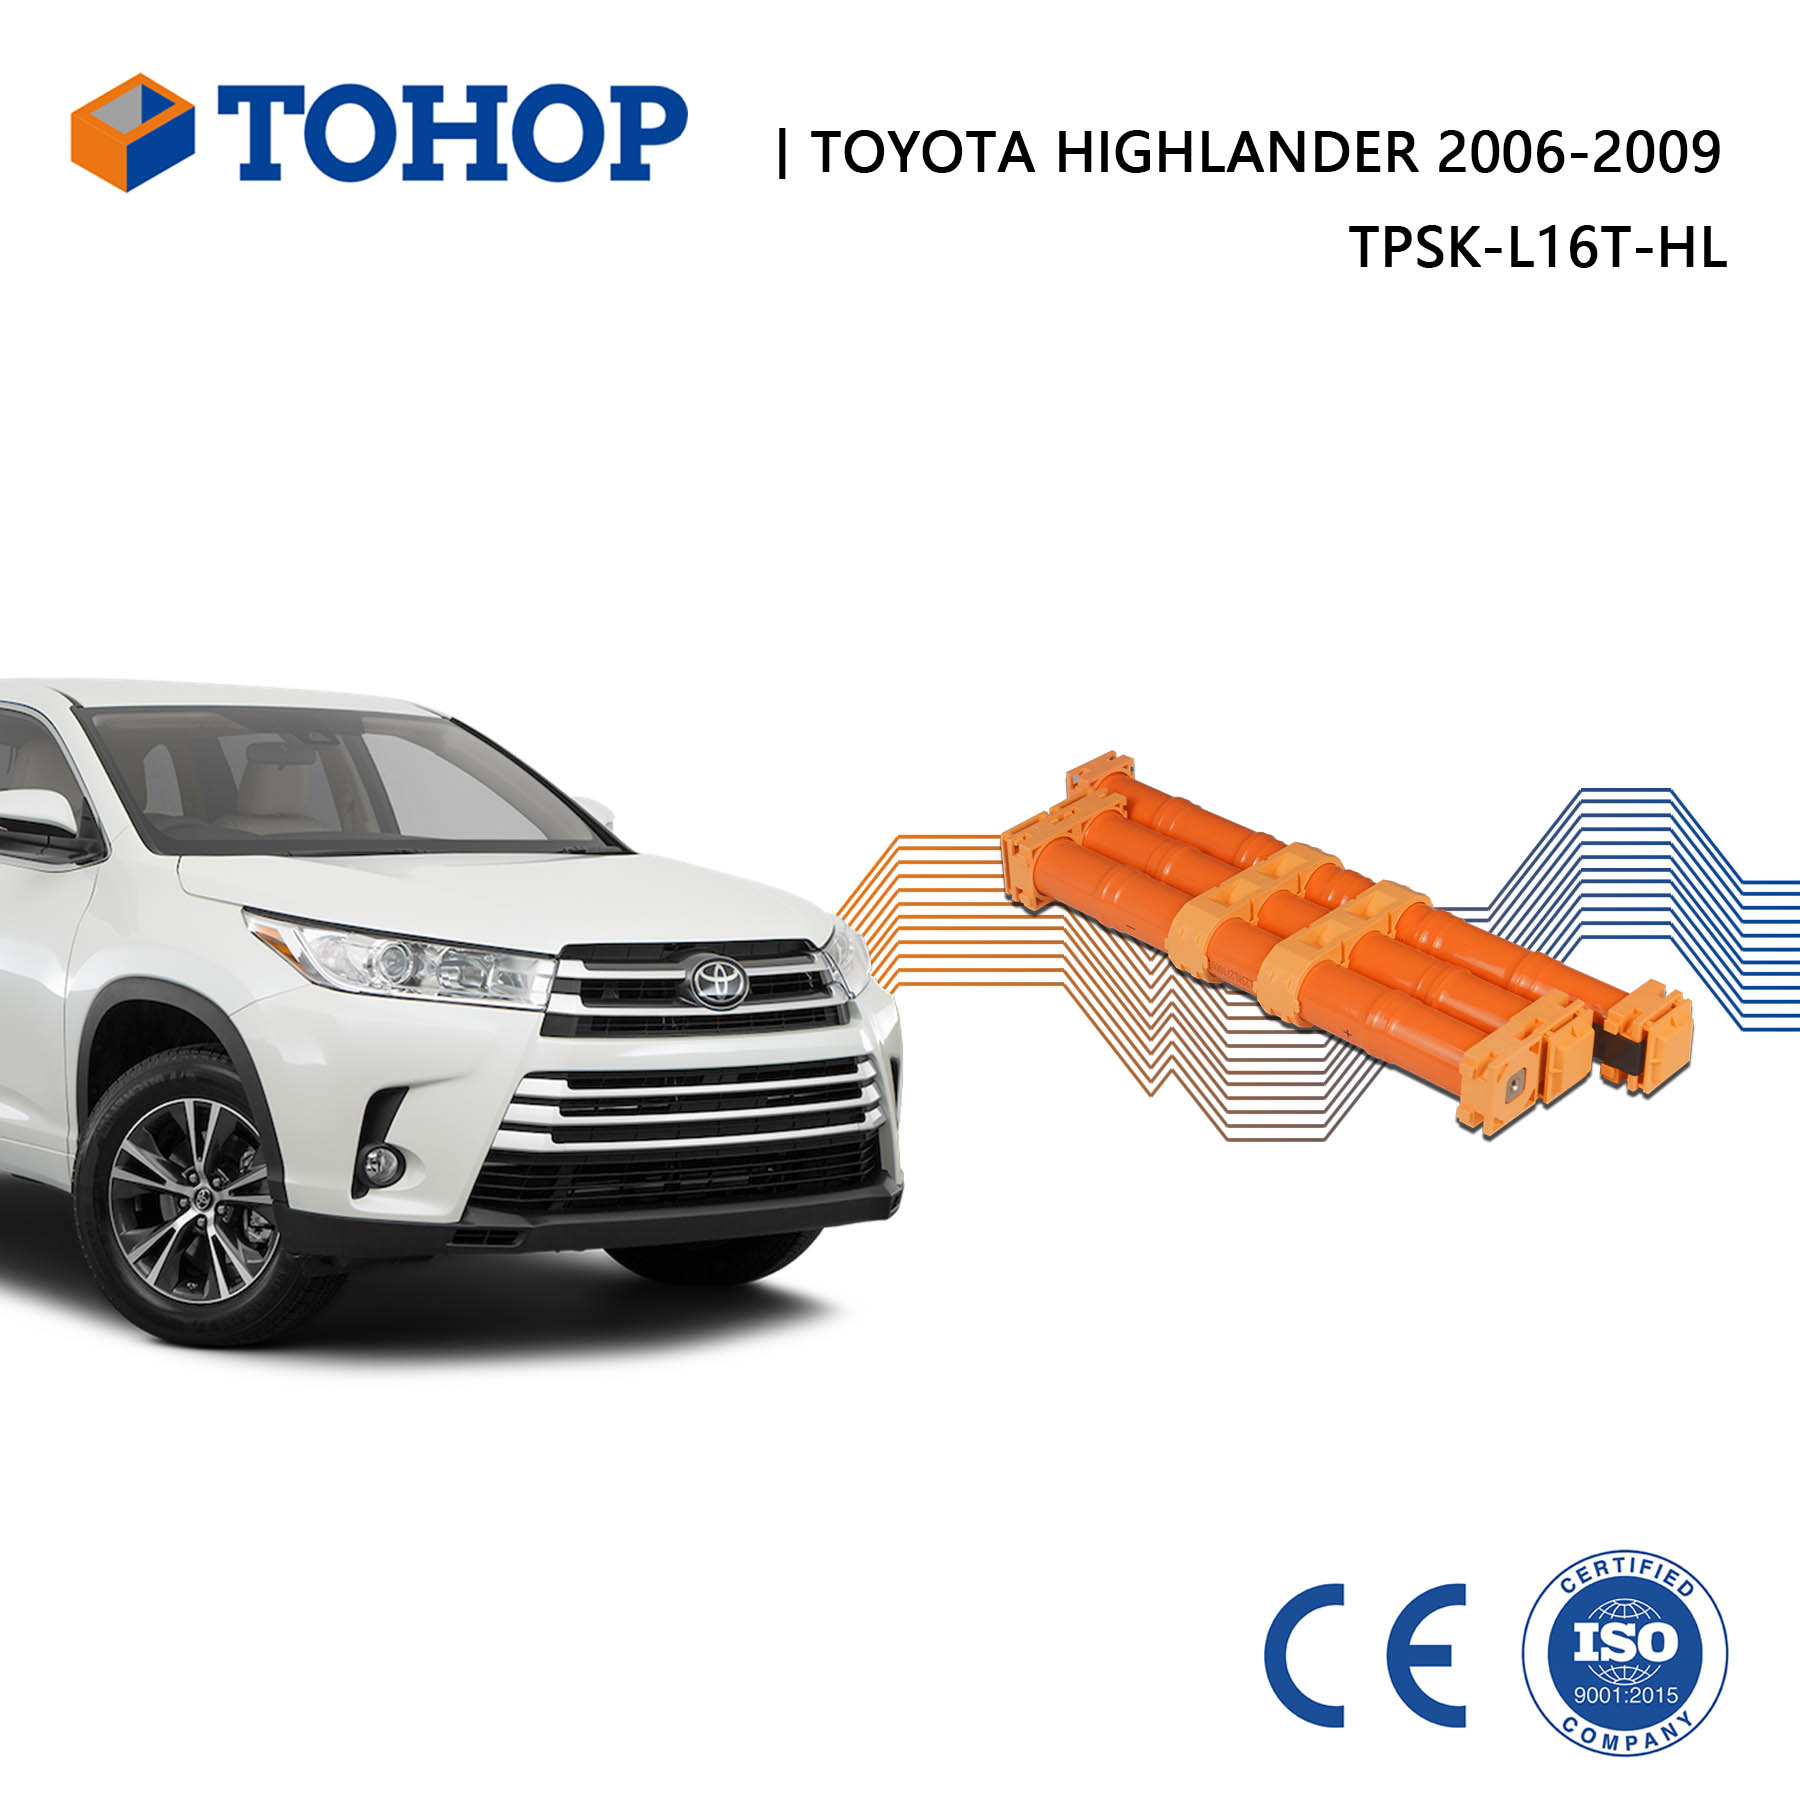 19.2V 6.5Ah Rechargeable Highlander 2009 Hybrid Car Battery Pack for Toyota